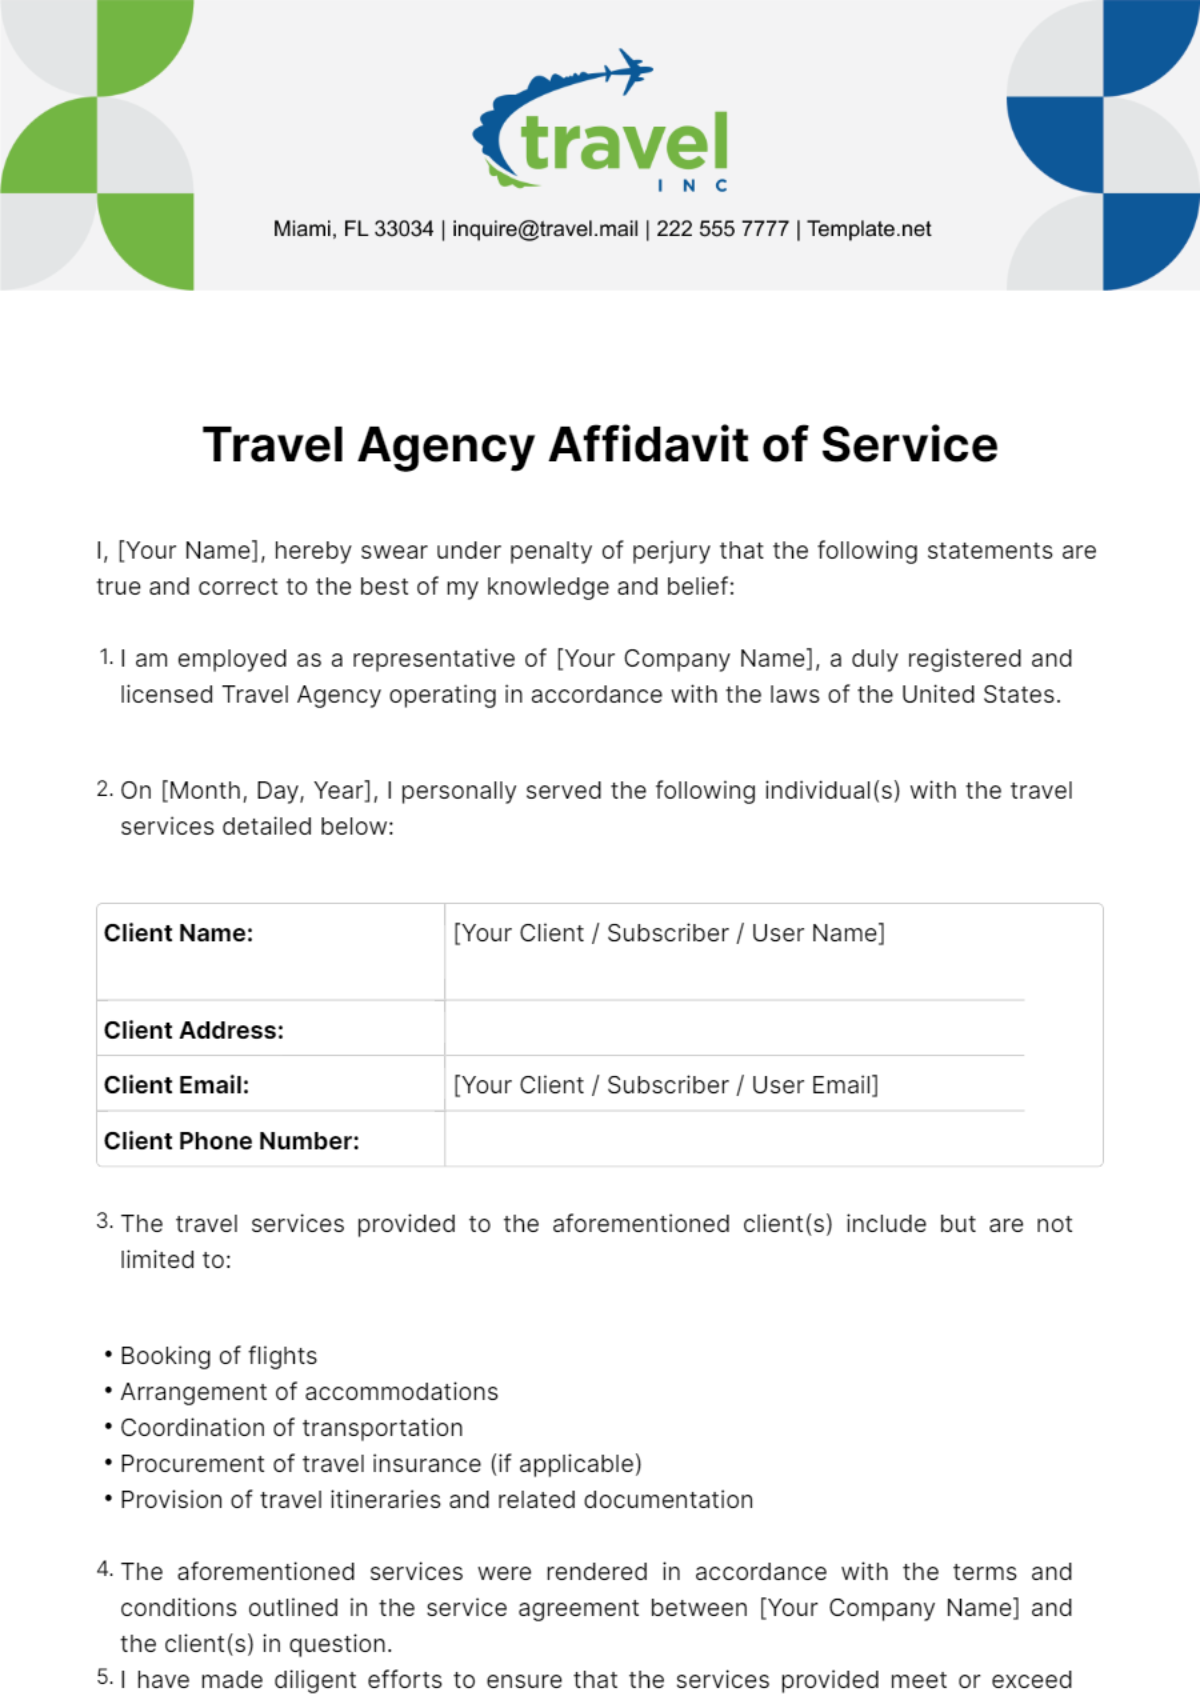 Free Travel Agency Affidavit of Service Template